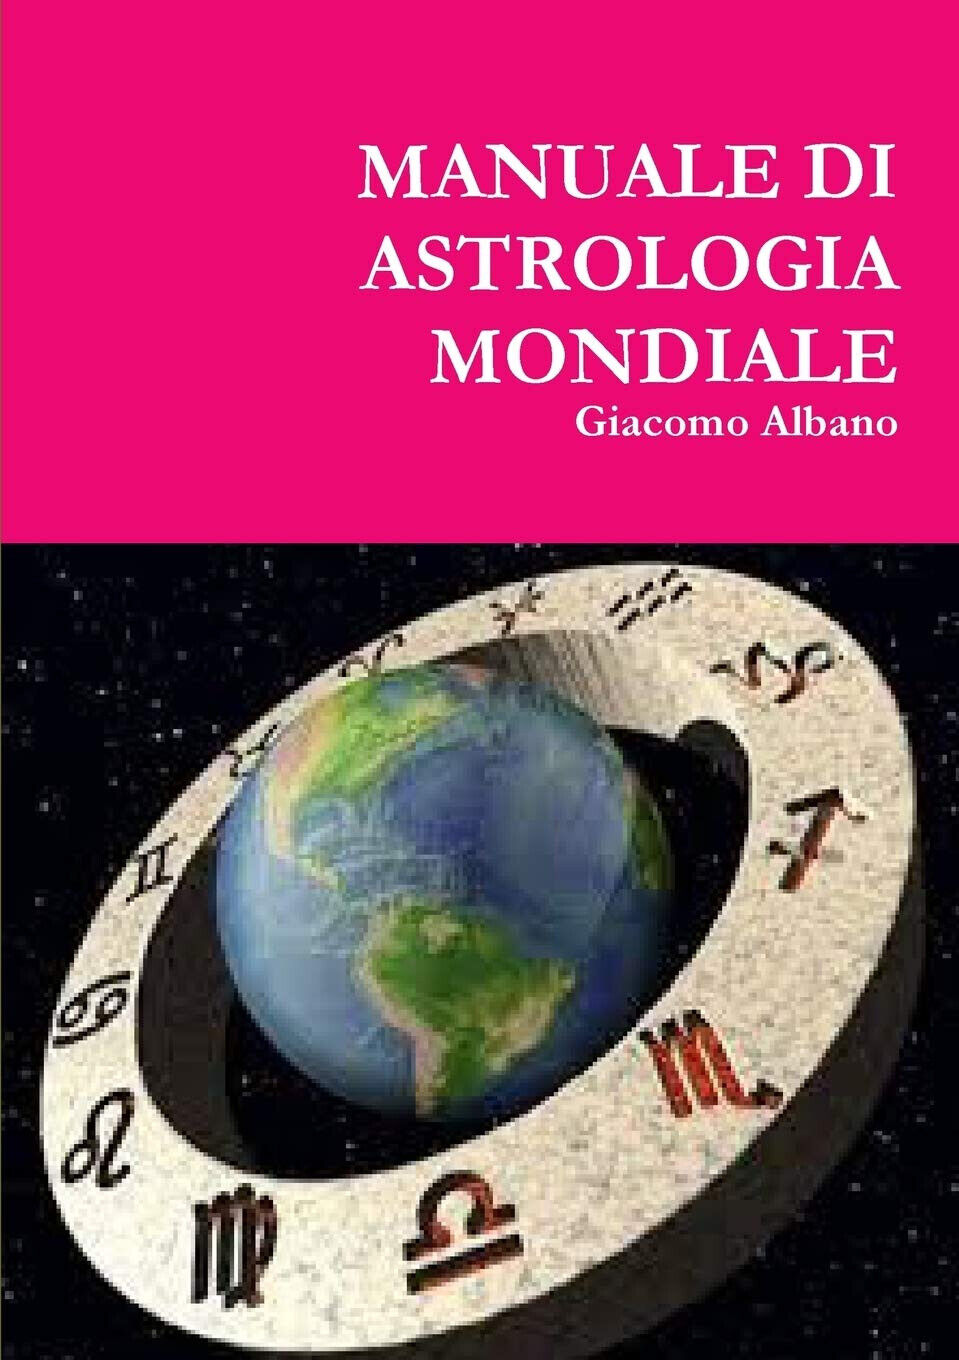 MANUALE DI ASTROLOGIA MONDIALE - Giacomo Albano - Lulu.com, 2015 libro usato